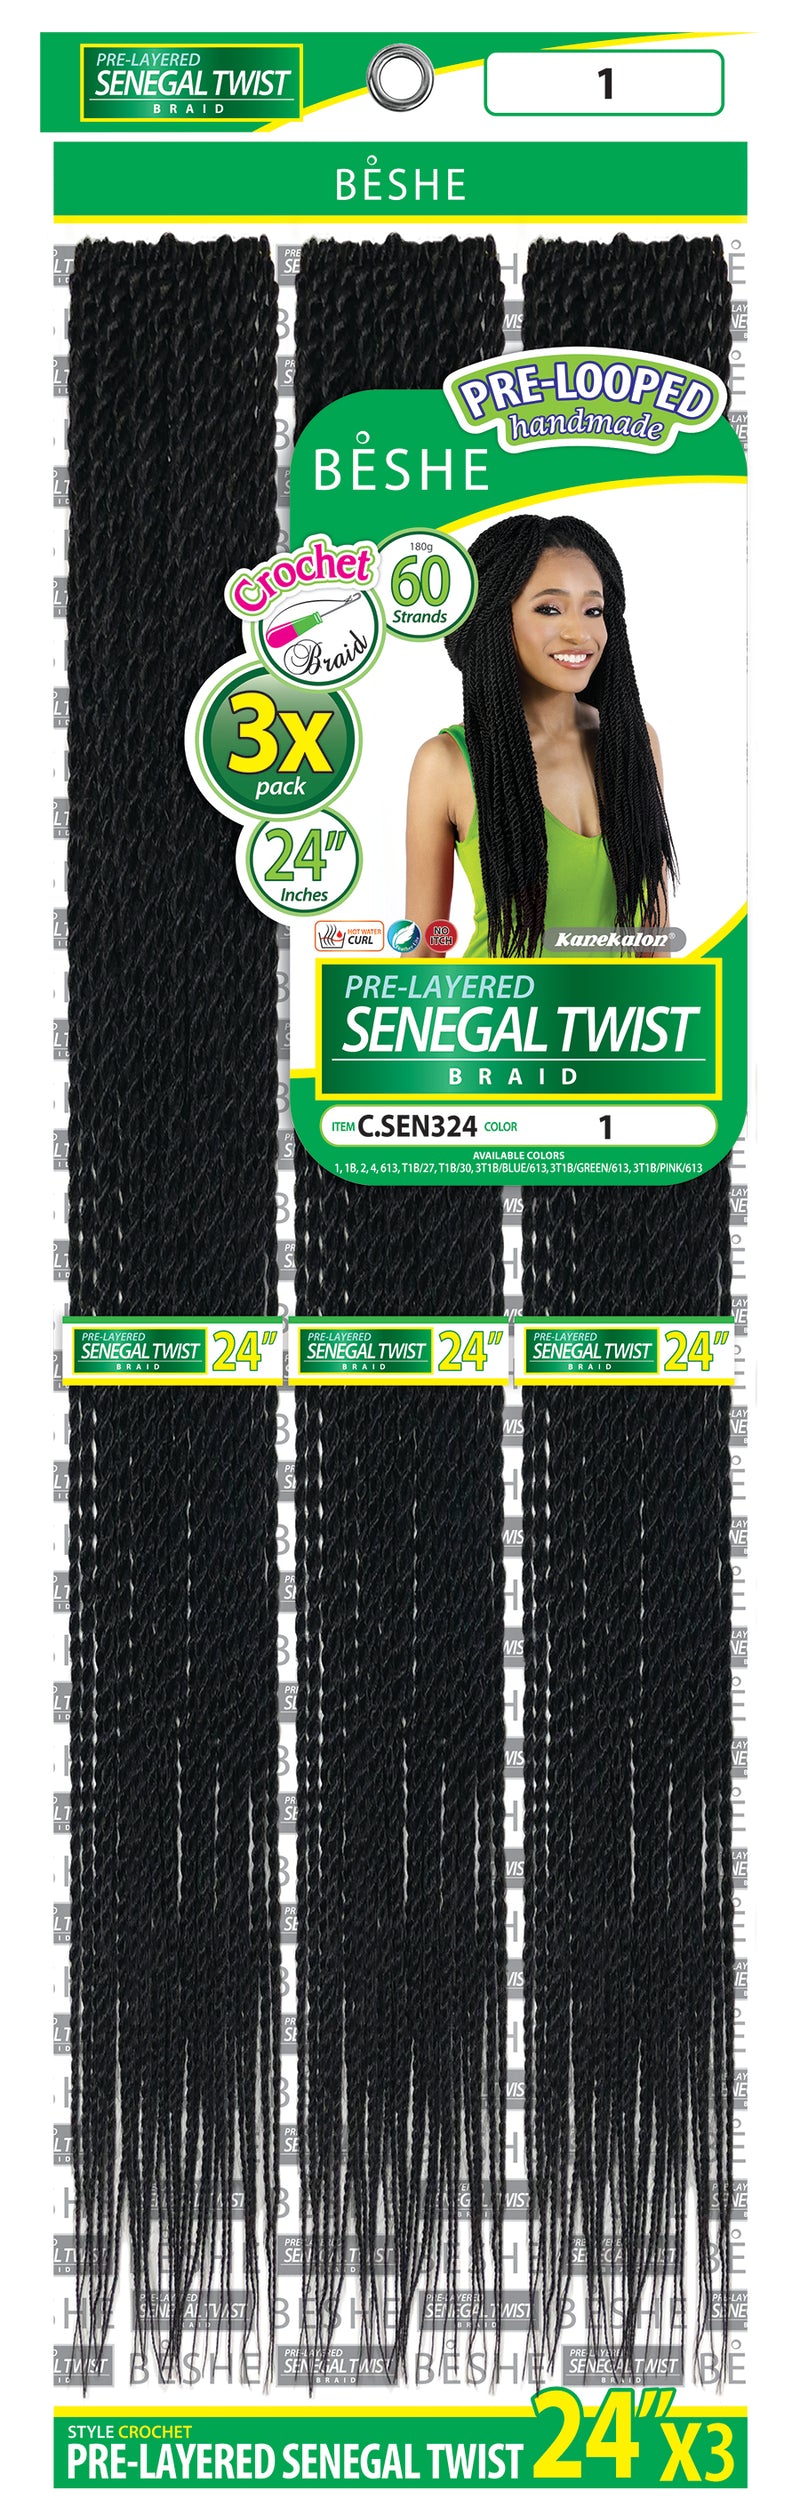 Beshe Crochet Braid 3X Pack Pre-Layered Senegal Twist Braid C.SEN324 - Elevate Styles